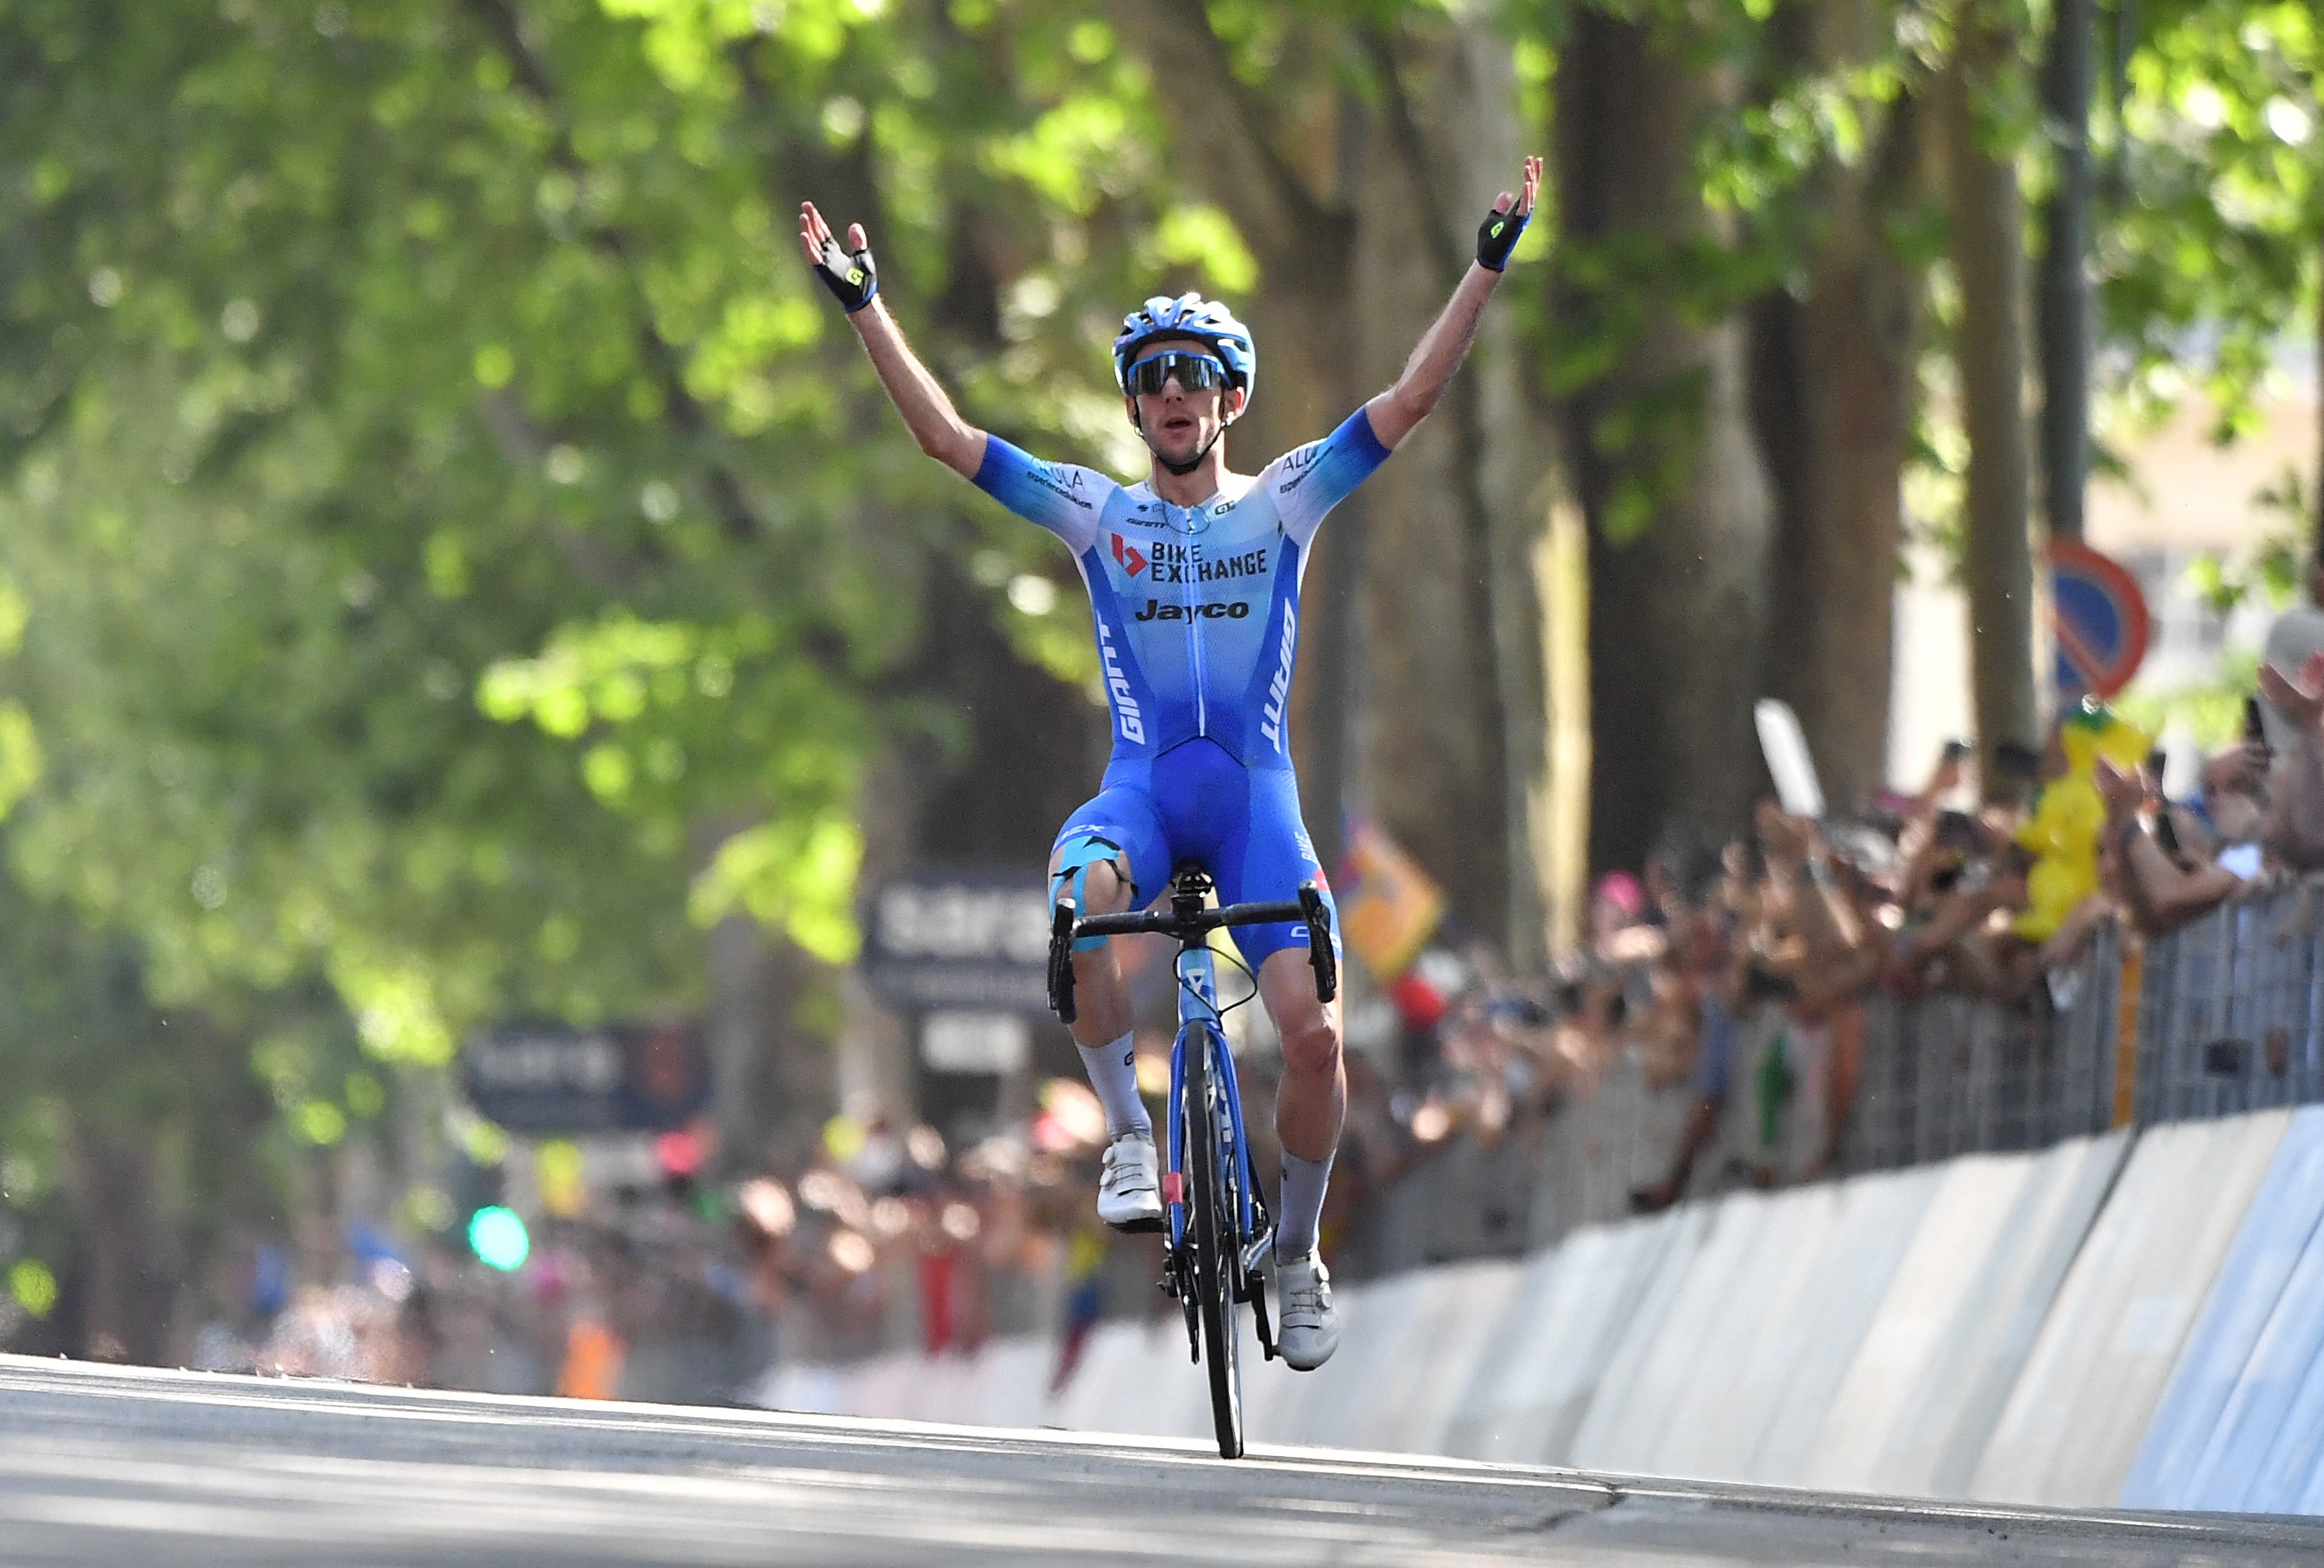 Cycling - Giro d'Italia - Stage 14 - Santena to Torino, Italy - May 21, 2022 Team BikeExchange - Jayco's Simon Yates celebrates winning stage 14 REUTERS/Jennifer Lorenzini